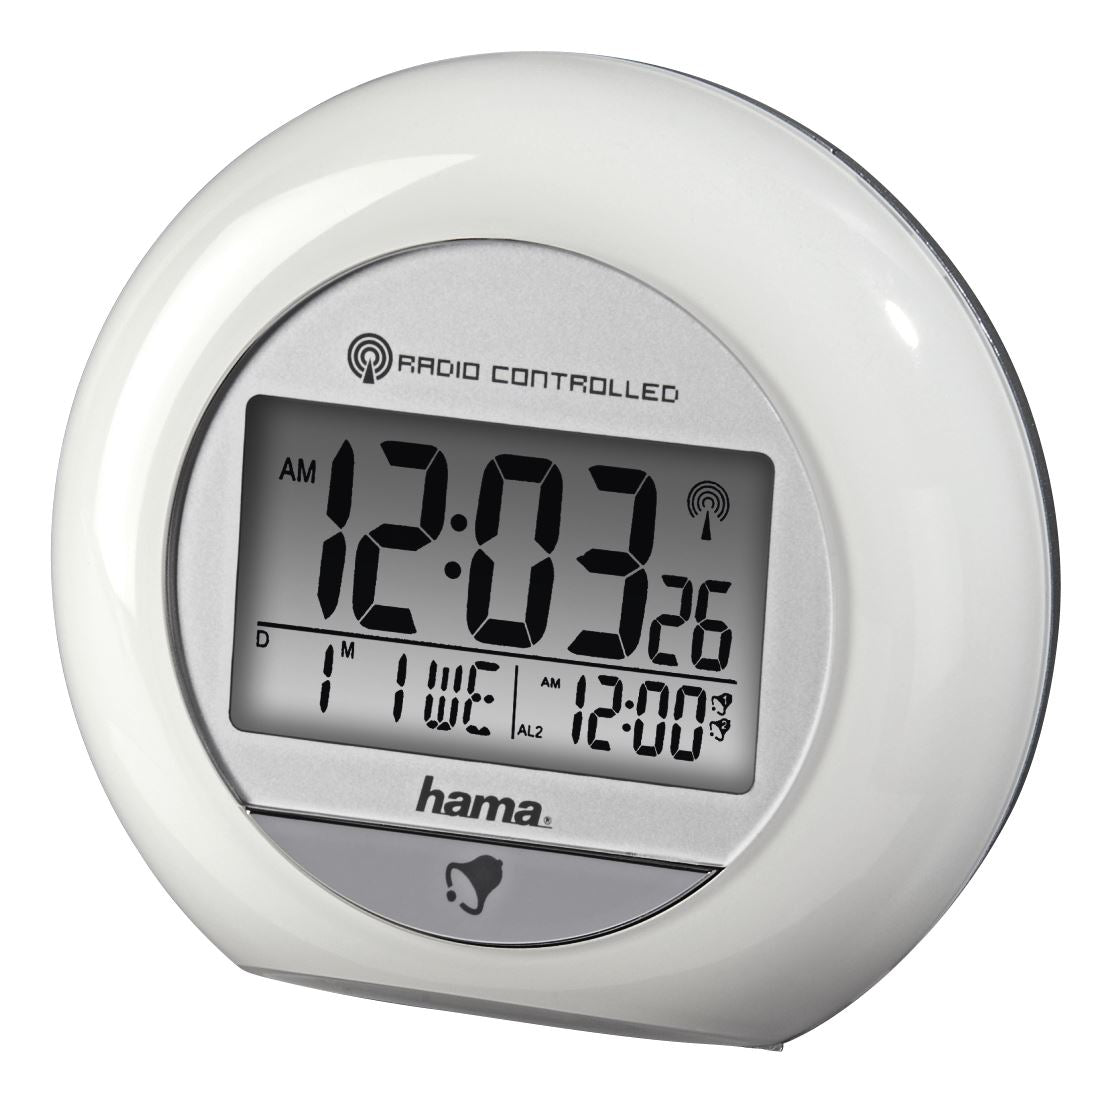 Hama "RC 600" Radio Controlled Alarm Clock, motion sensor, snooze funct., white